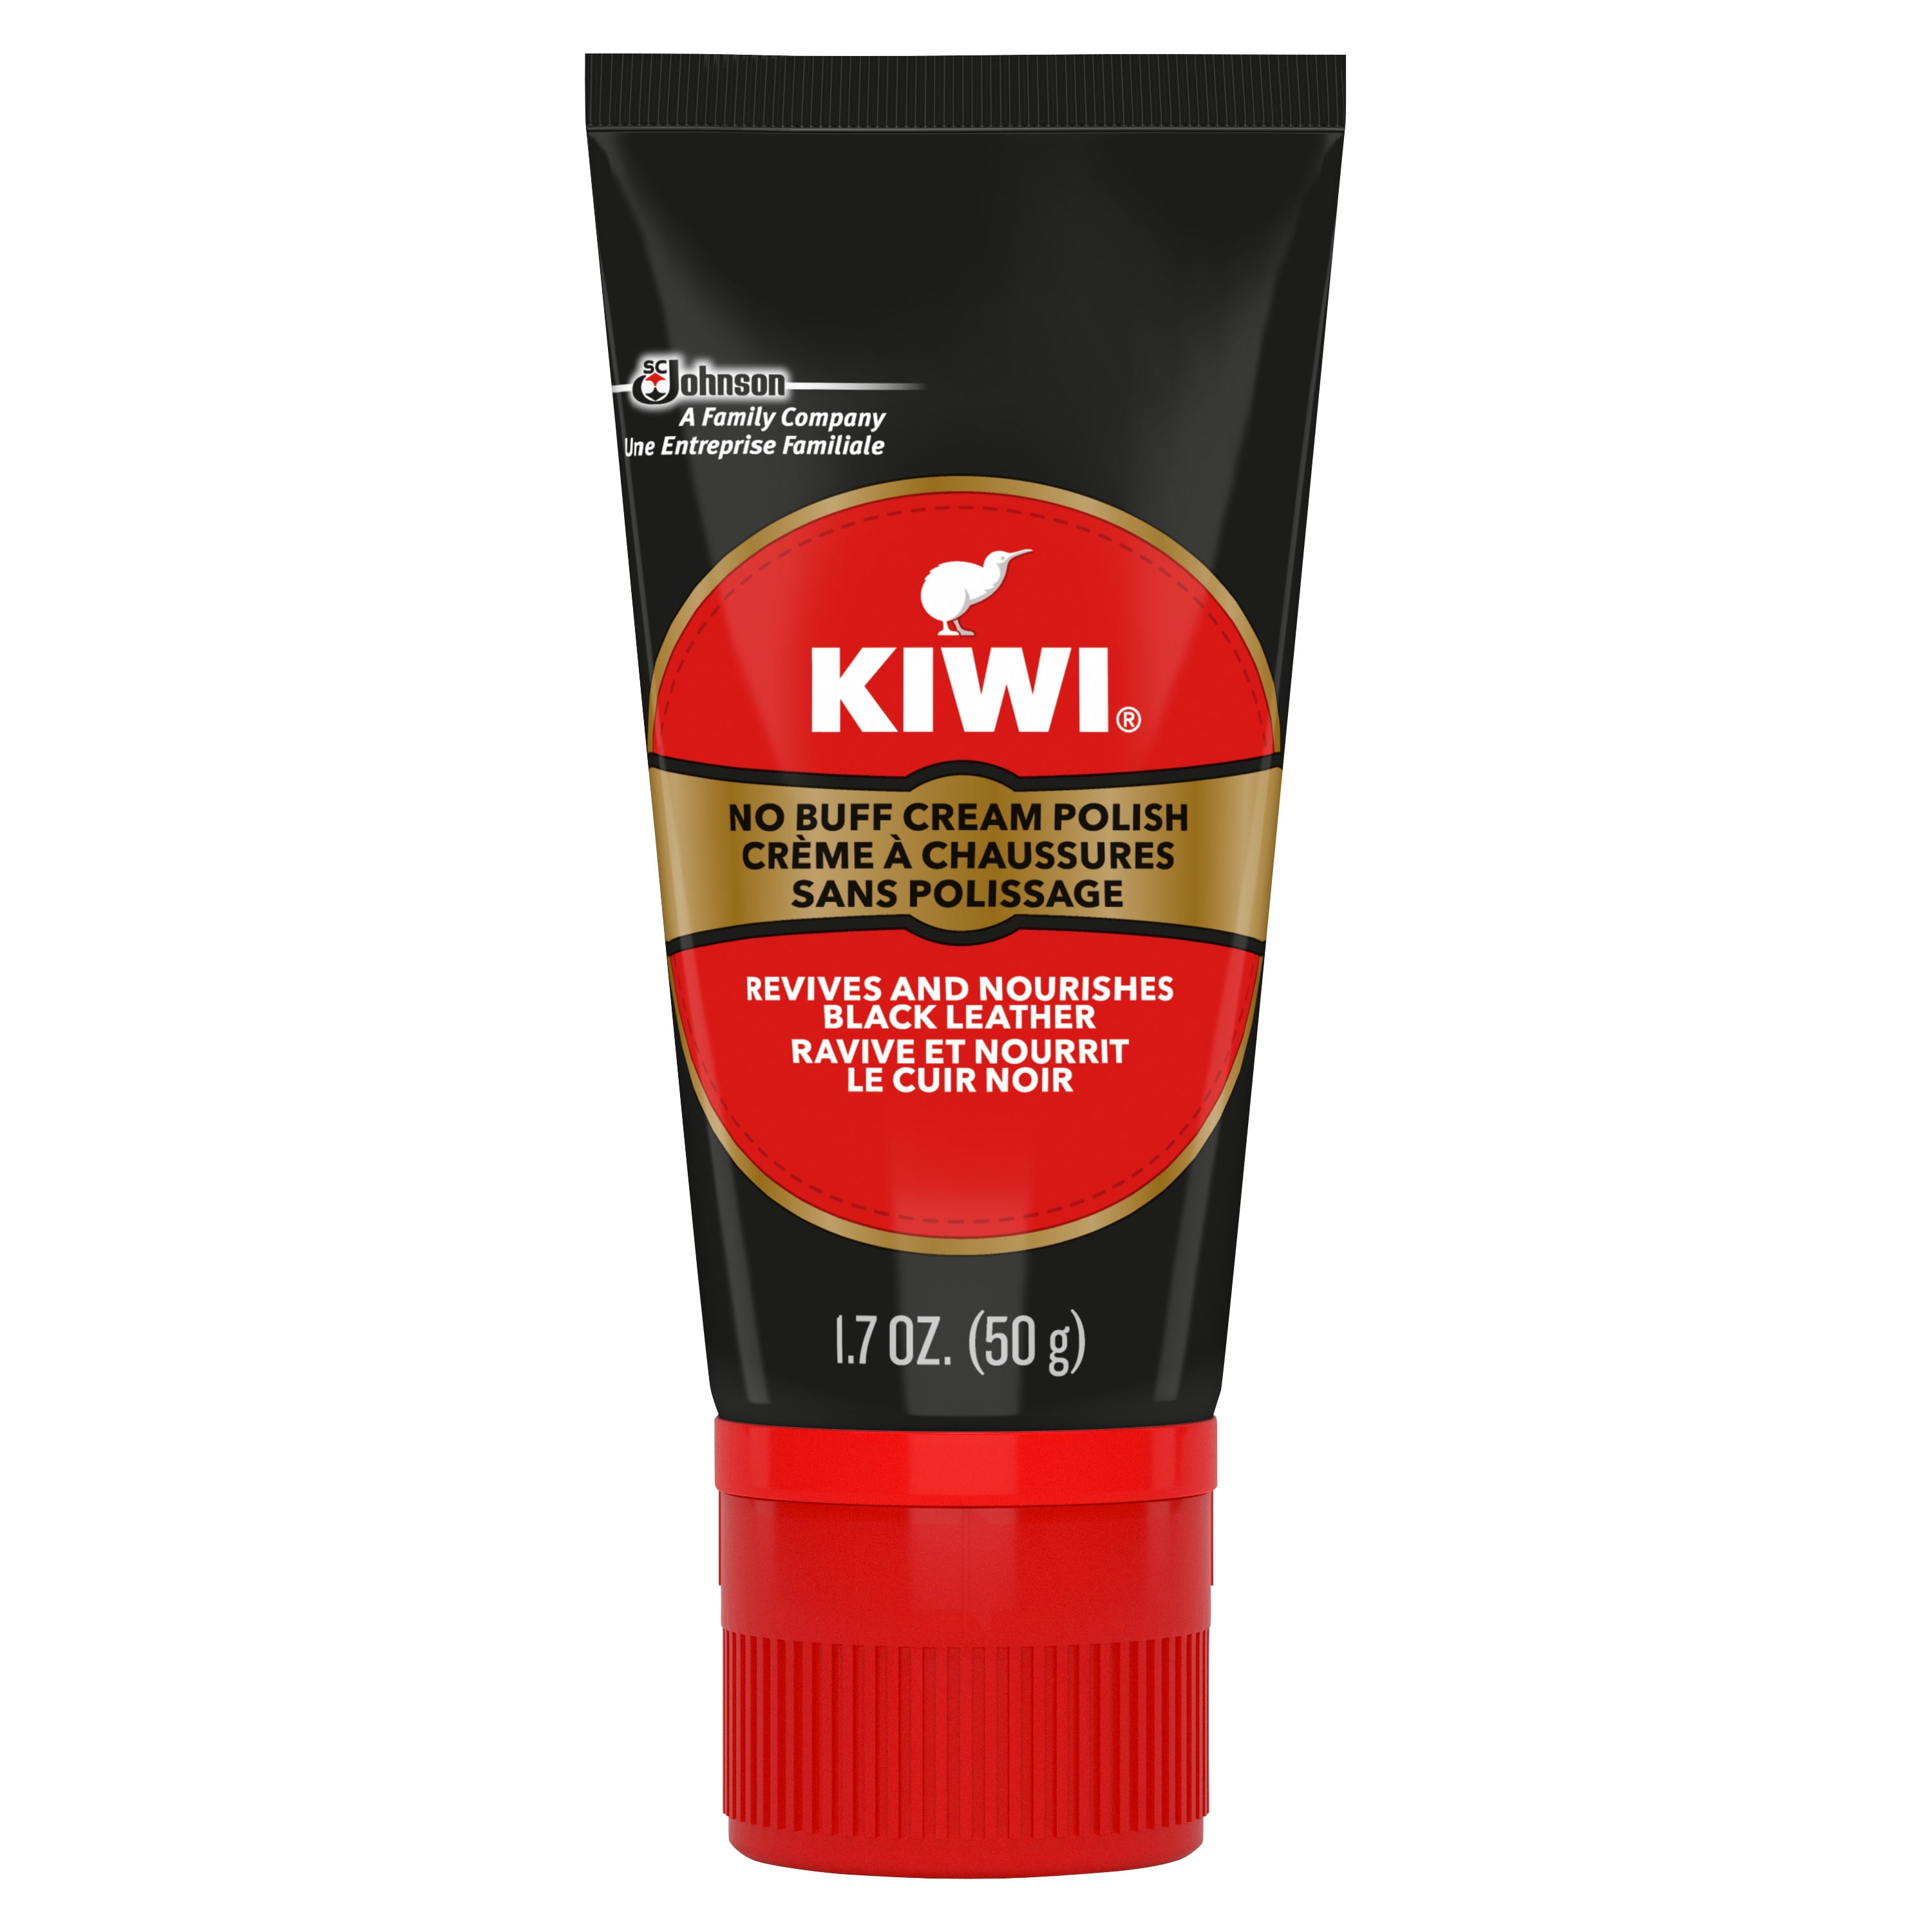 KIWI Shine and Nourish Cream, Black, 1.7 oz - Walmart.com - Walmart.com